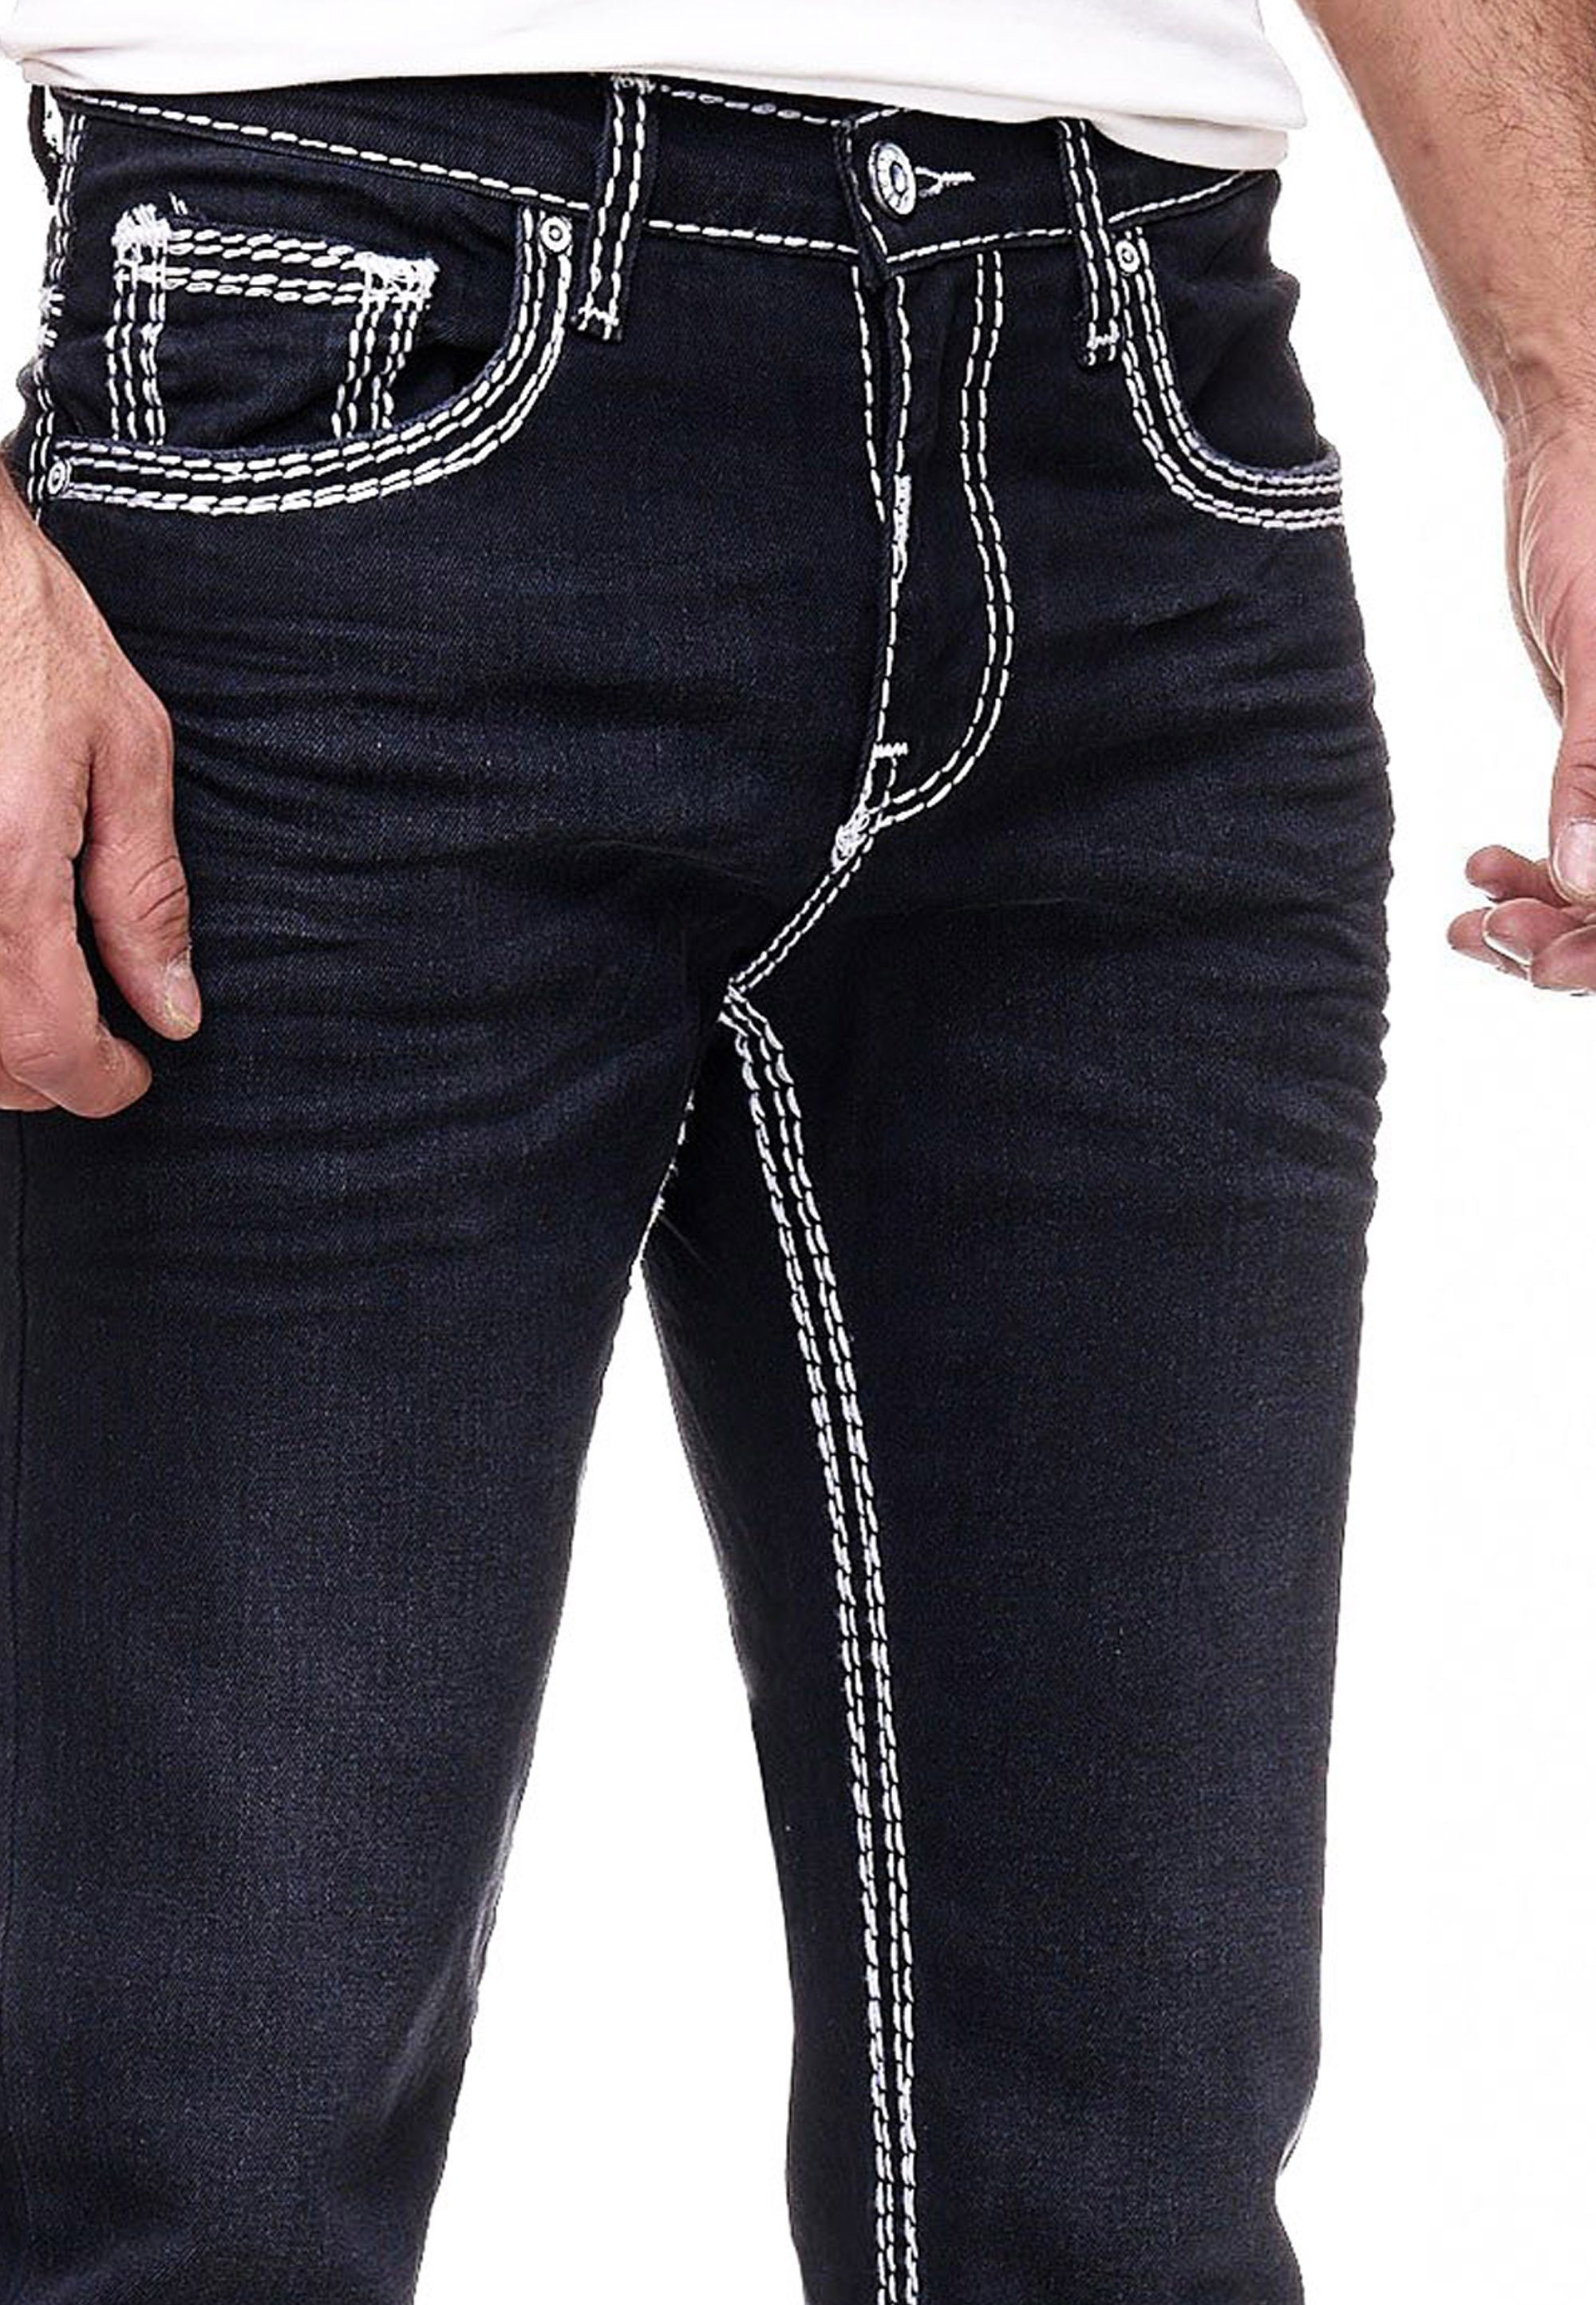 Rusty Neal Straight-Jeans LEVIN 7 Kontrastnähten mit trendigen